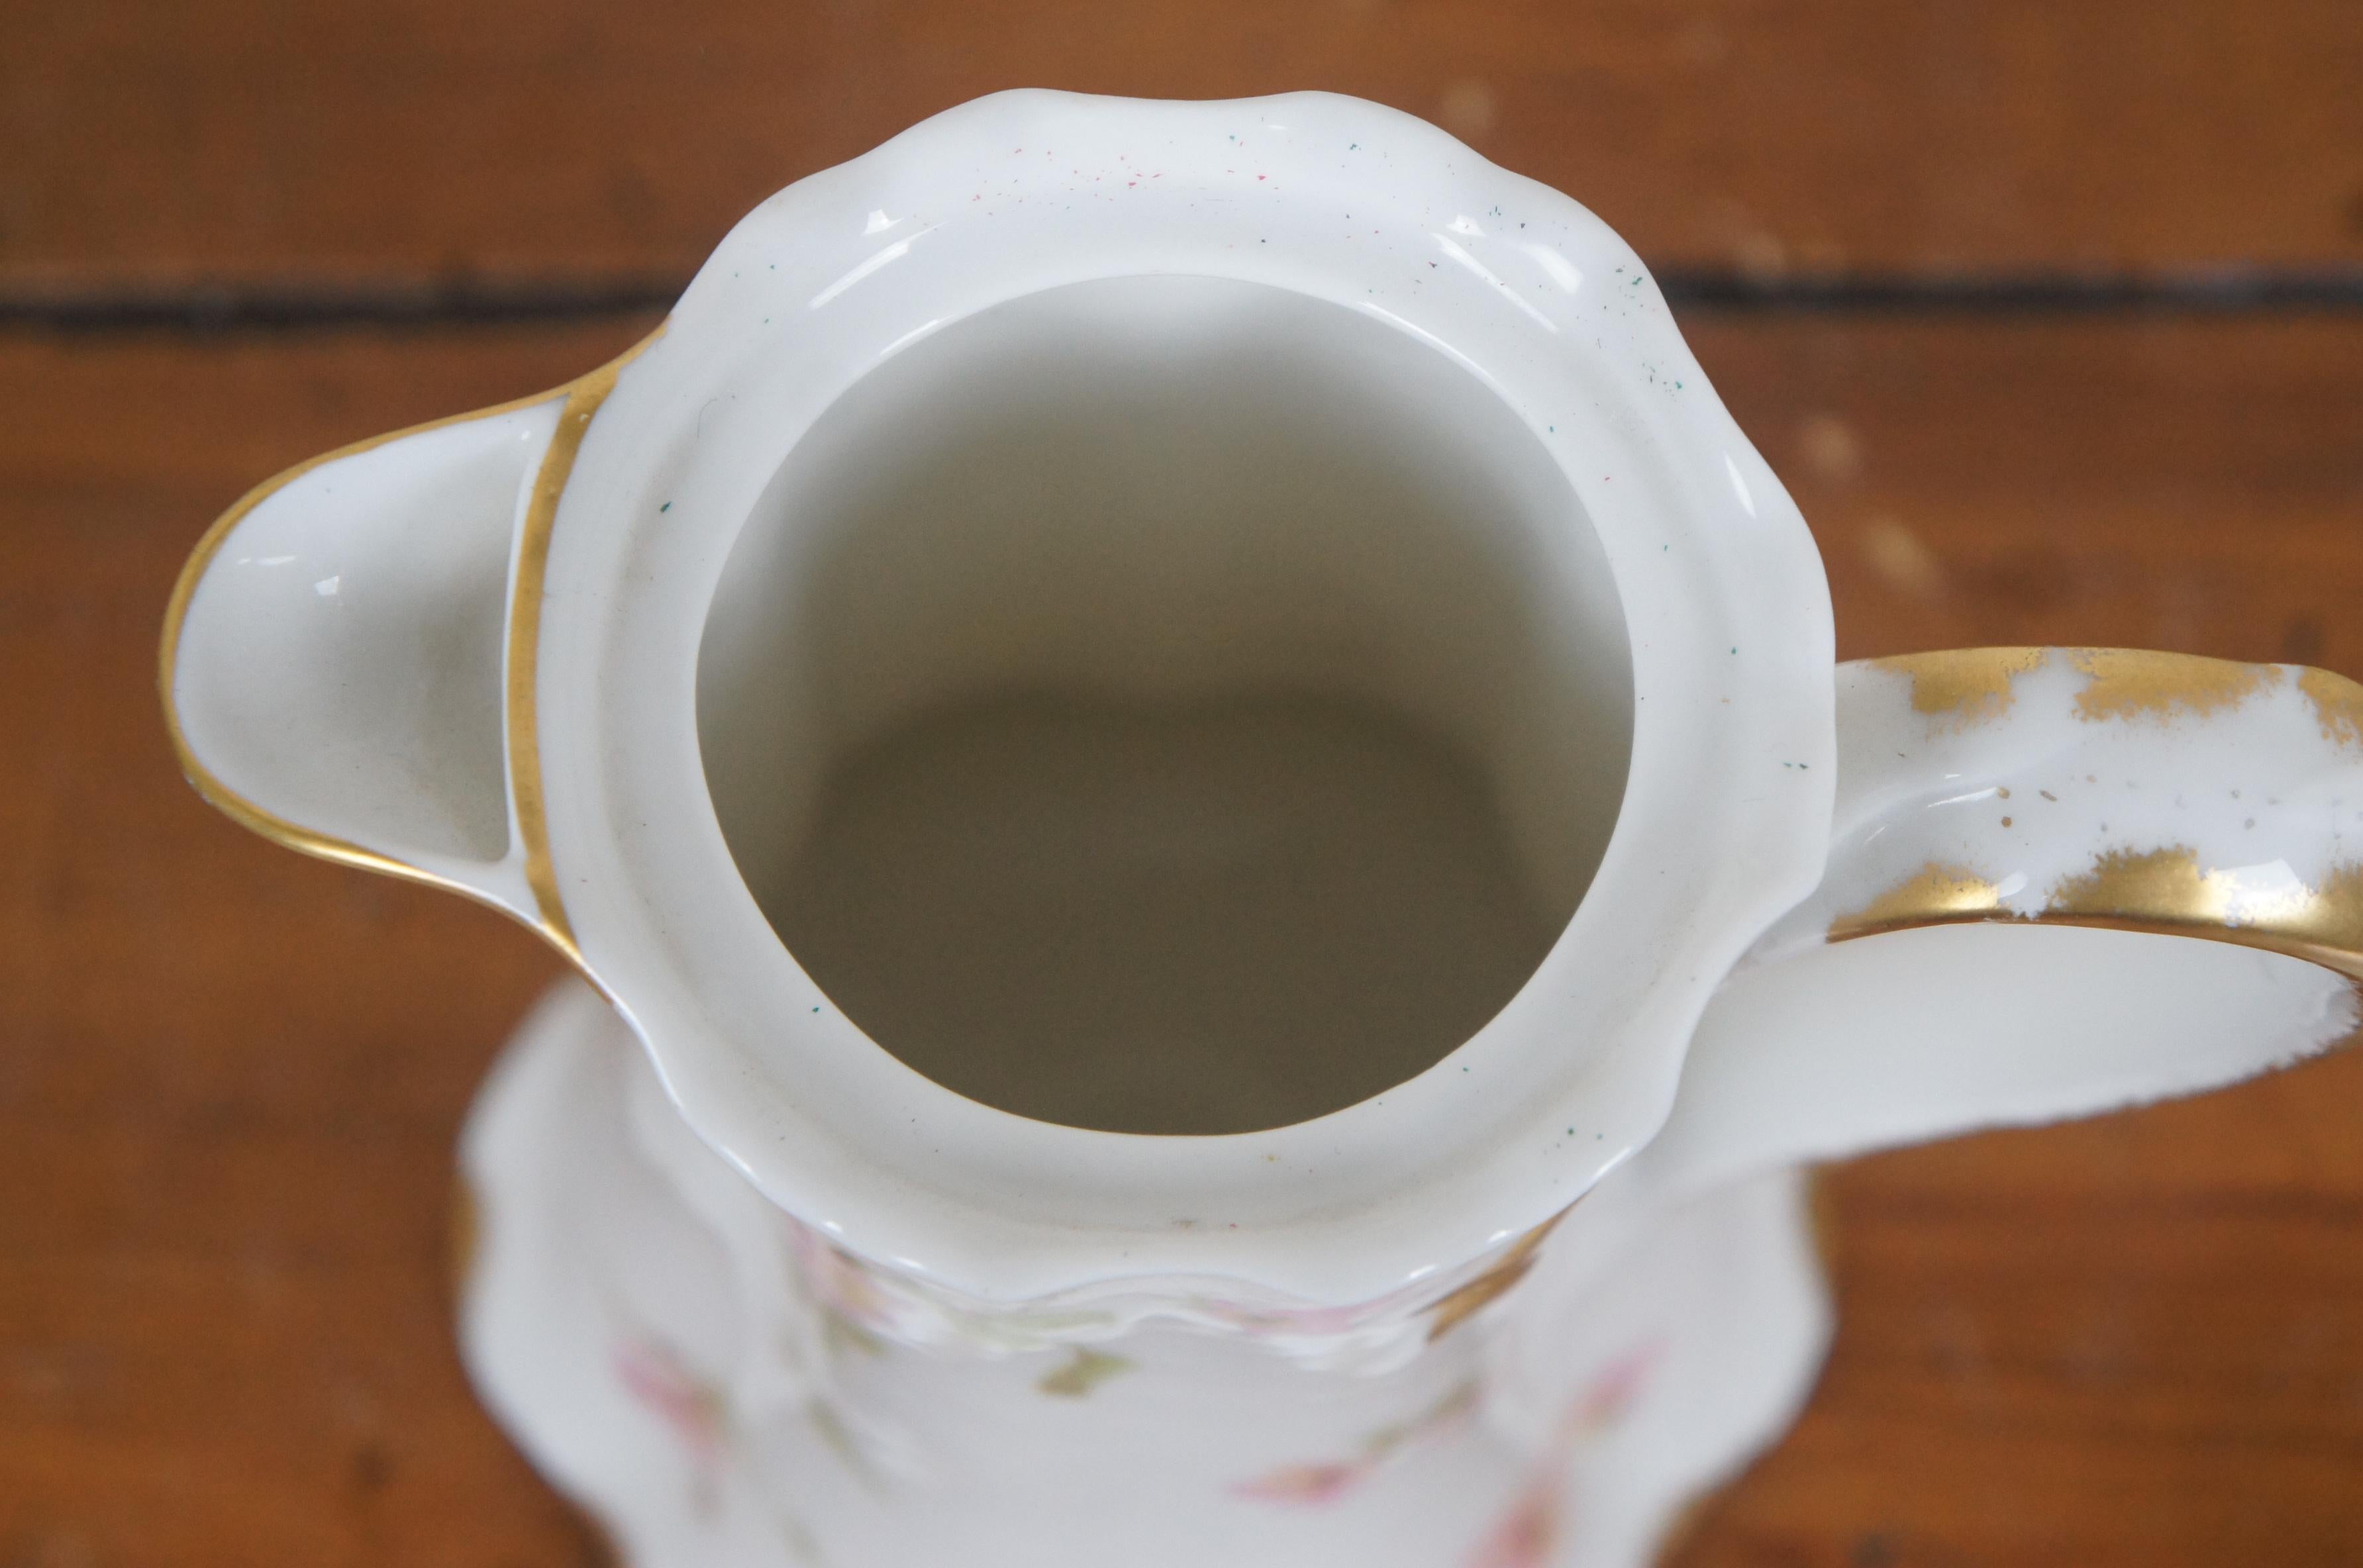 Antike Haviland Limoges Frankreich Schokolade Tee Kaffee Topf Floral Rose Teekanne 10